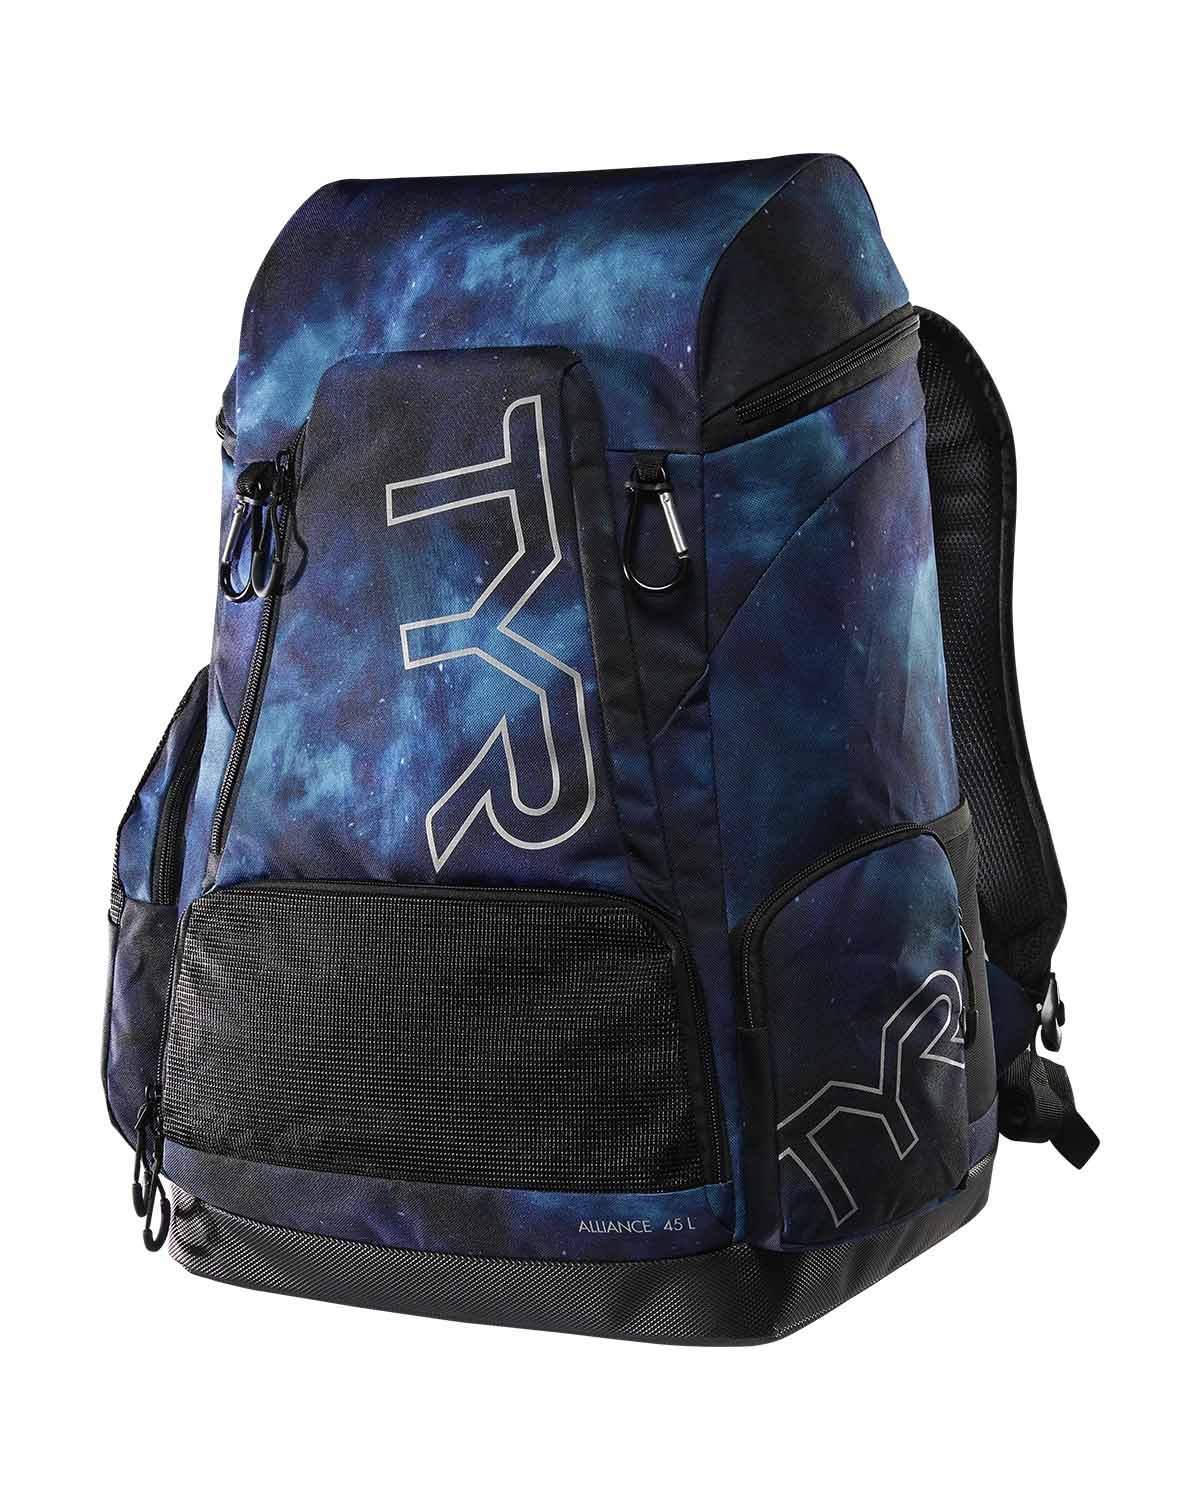 Alliance 45Lt backpack. Backpack - Cosmic Night